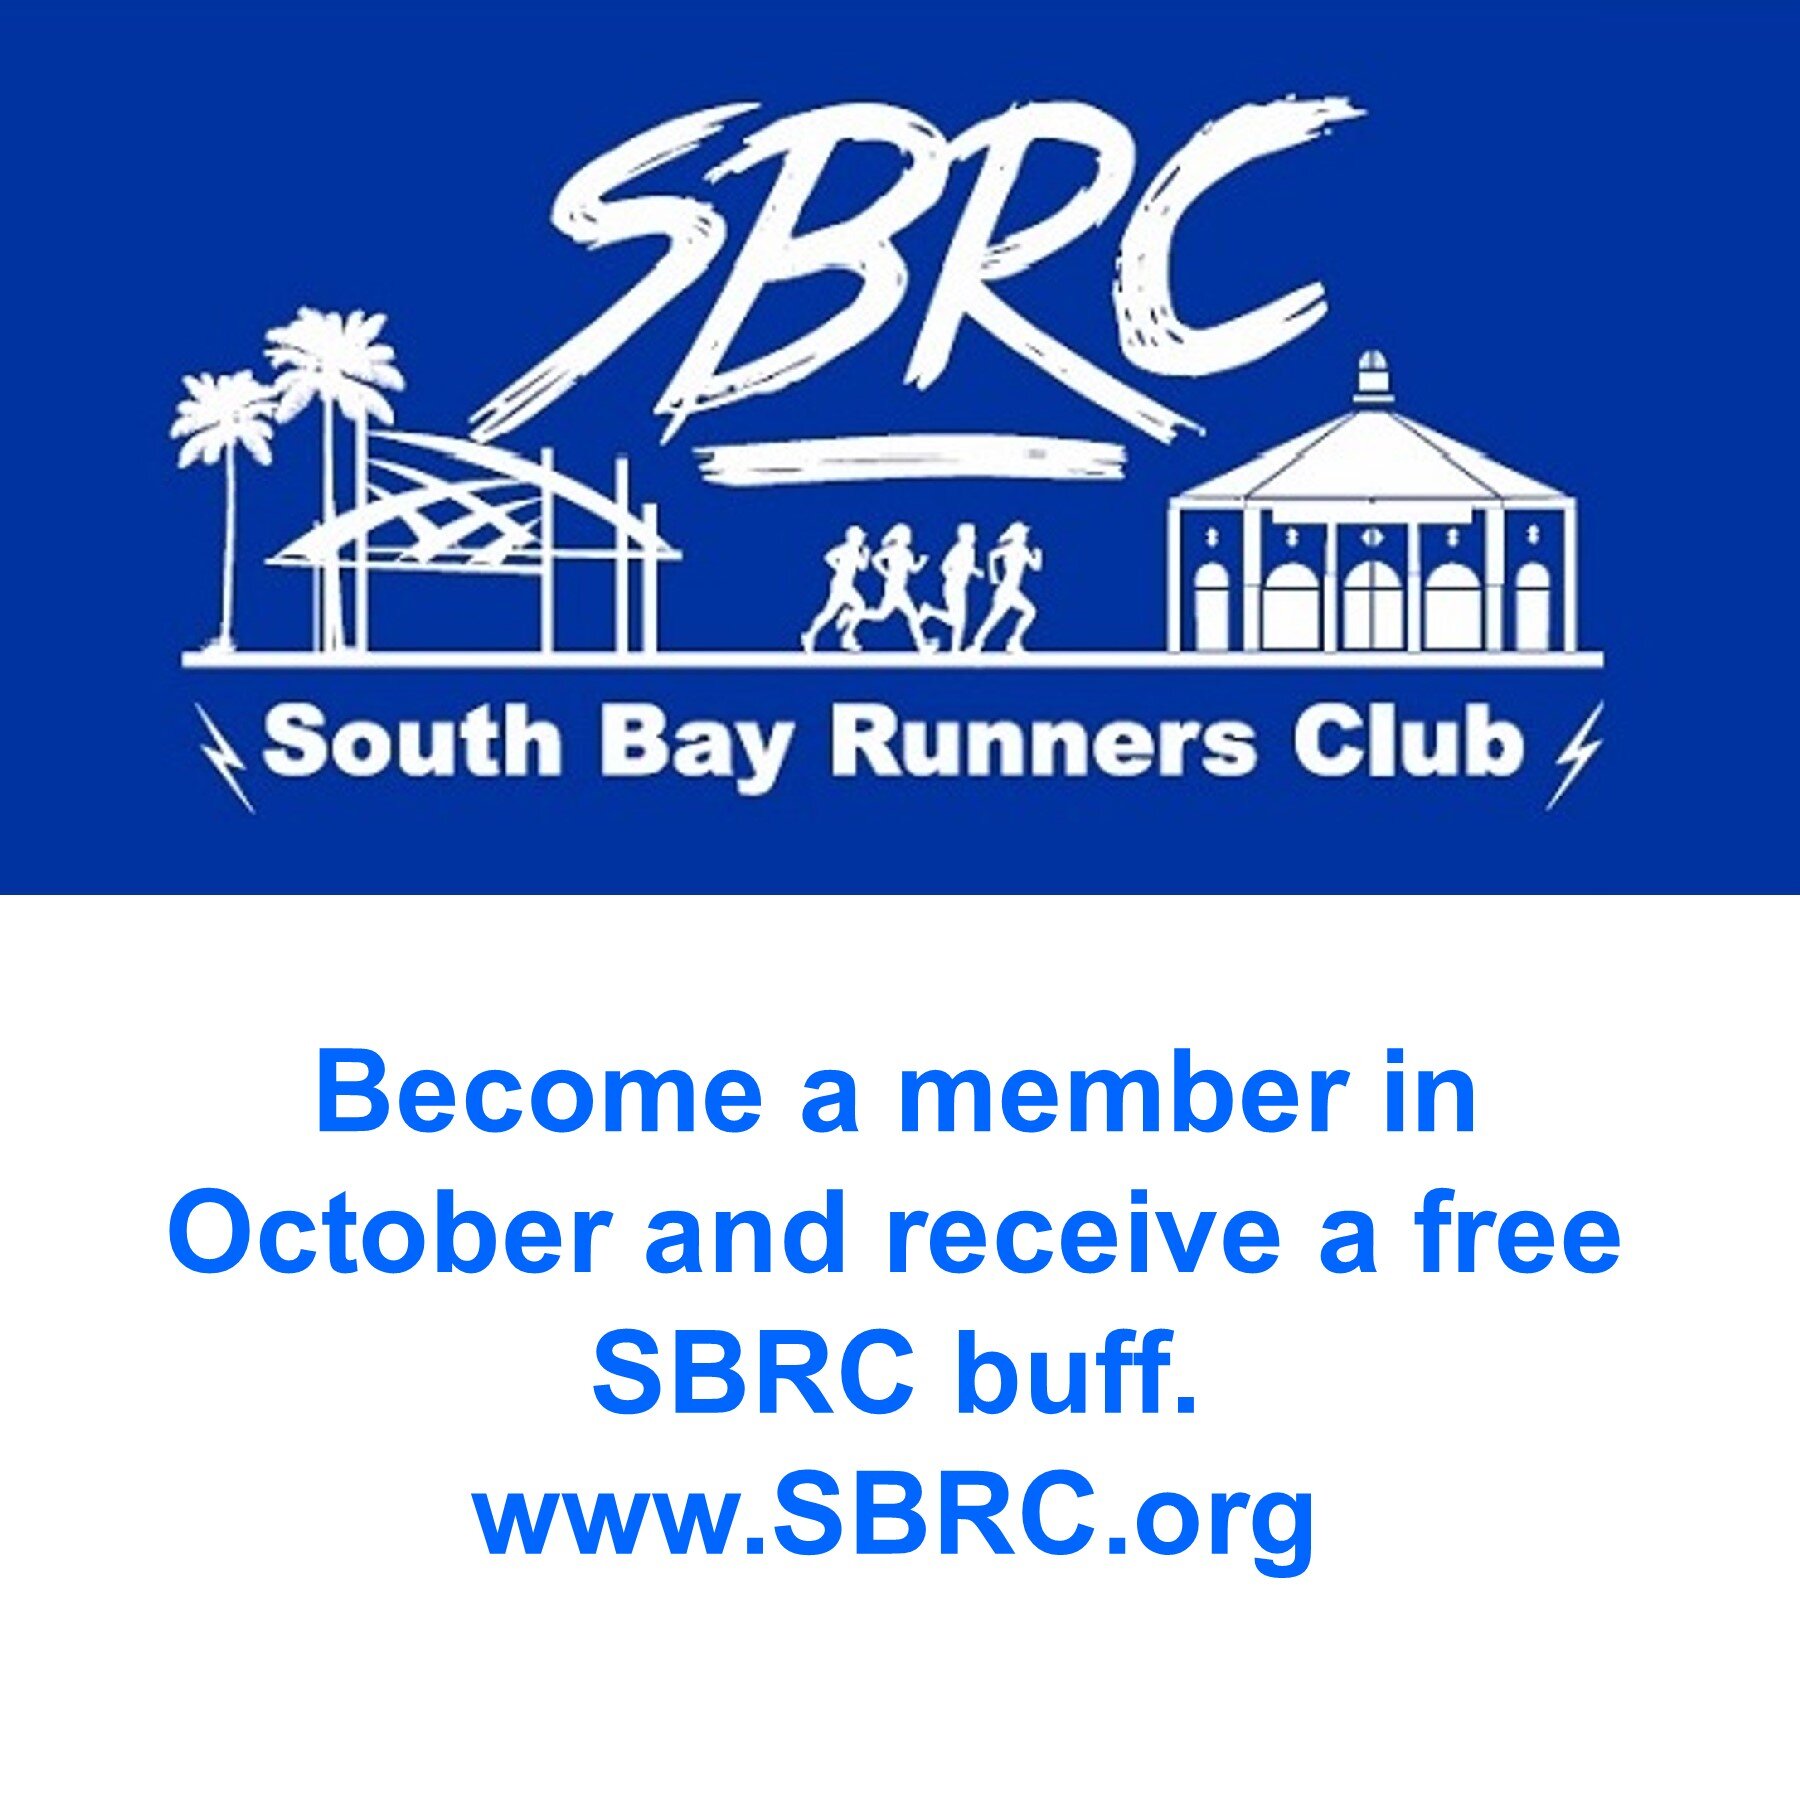 South Bay Runners Club